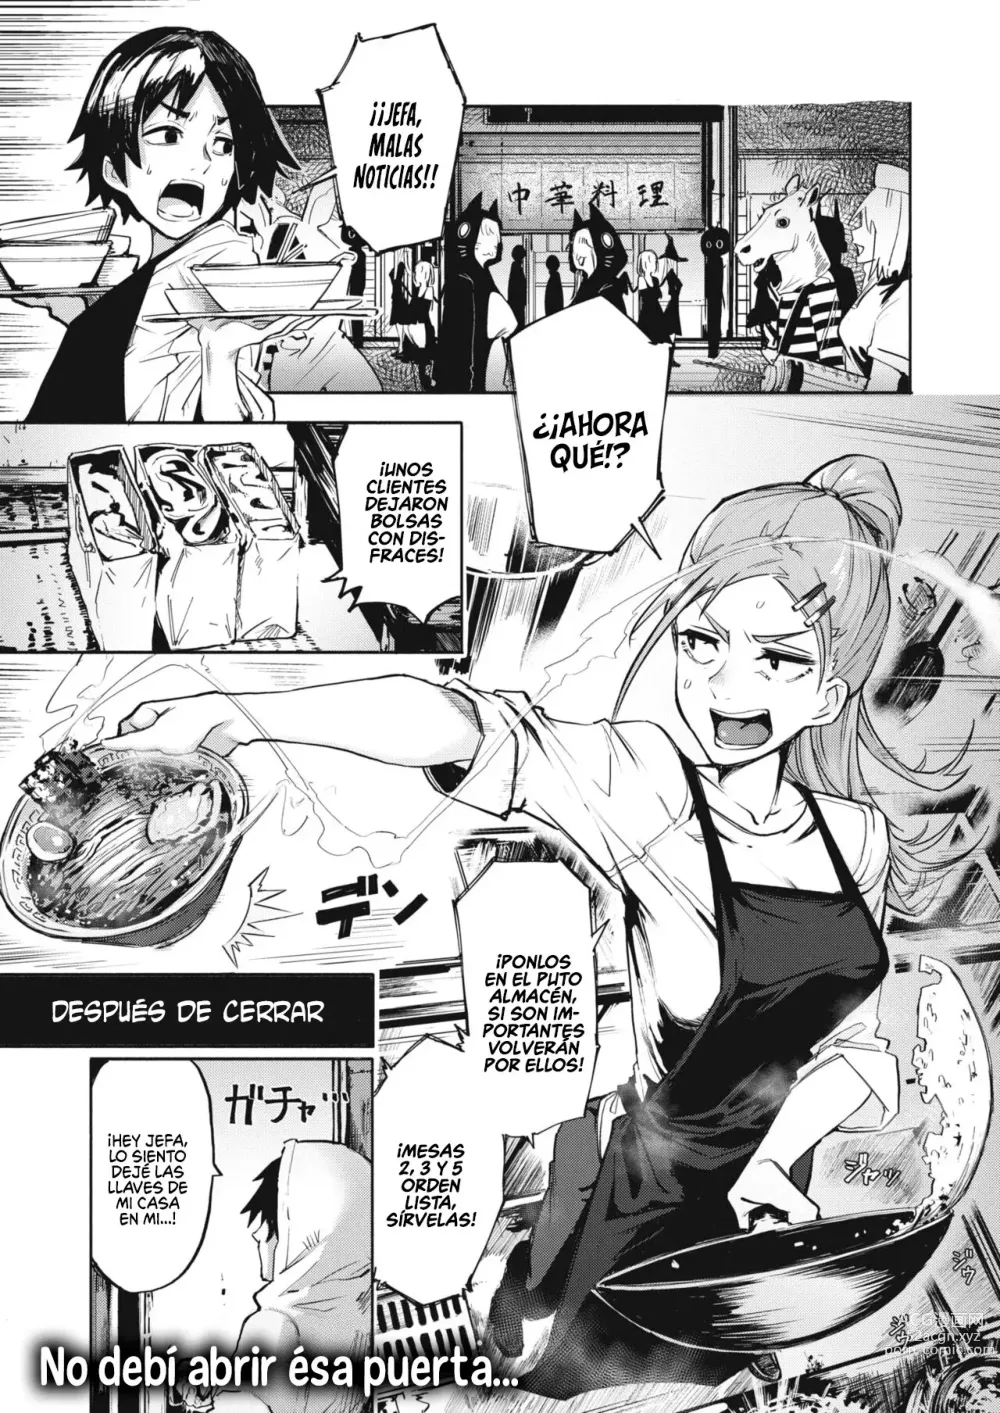 Page 1 of doujinshi Estas exagerando abuela!